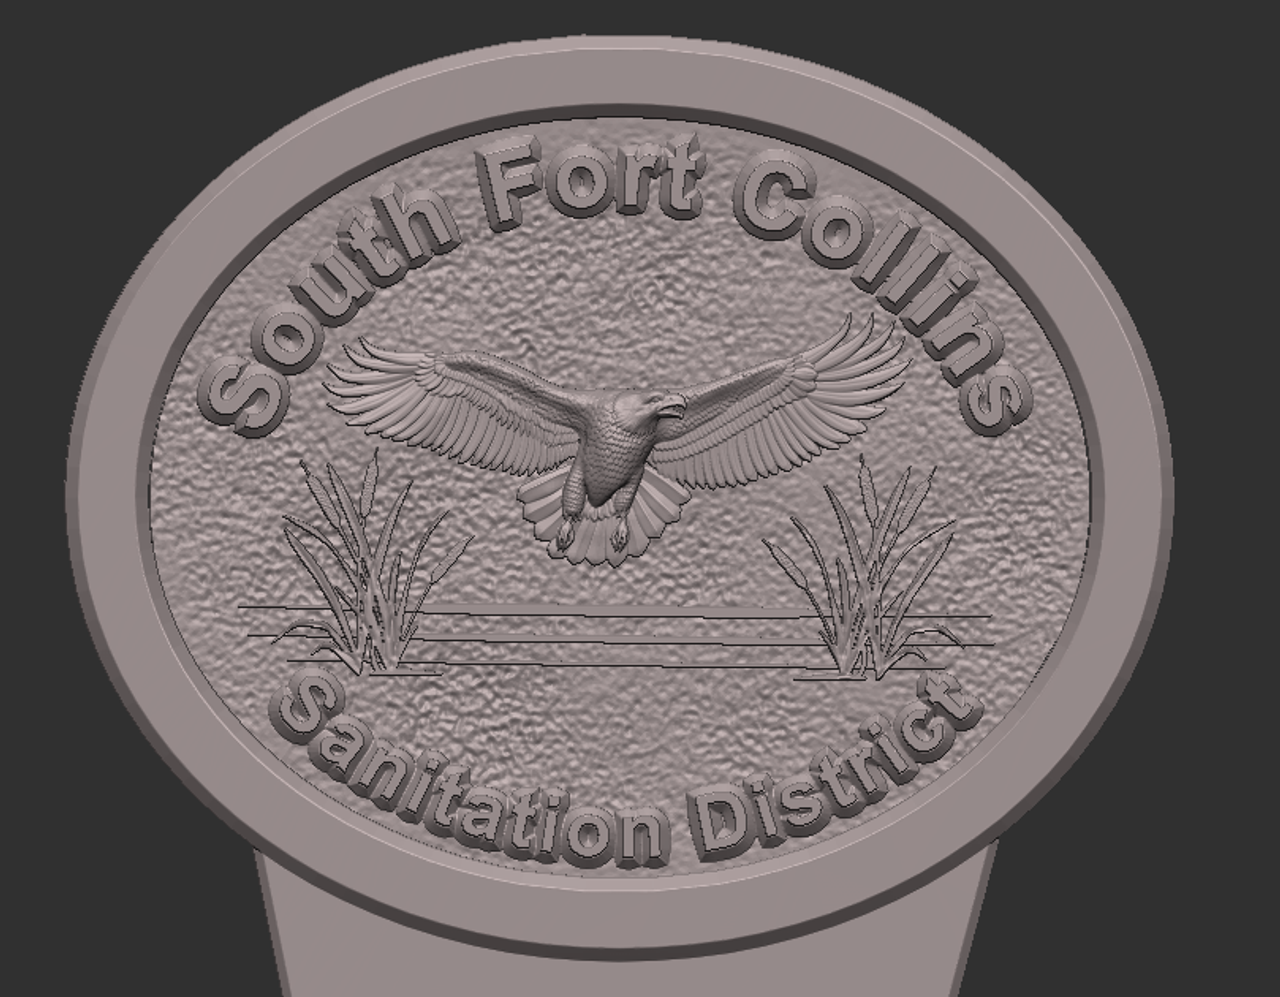 South Fort Collins Sanitation District Buckle (RESTRICTED)